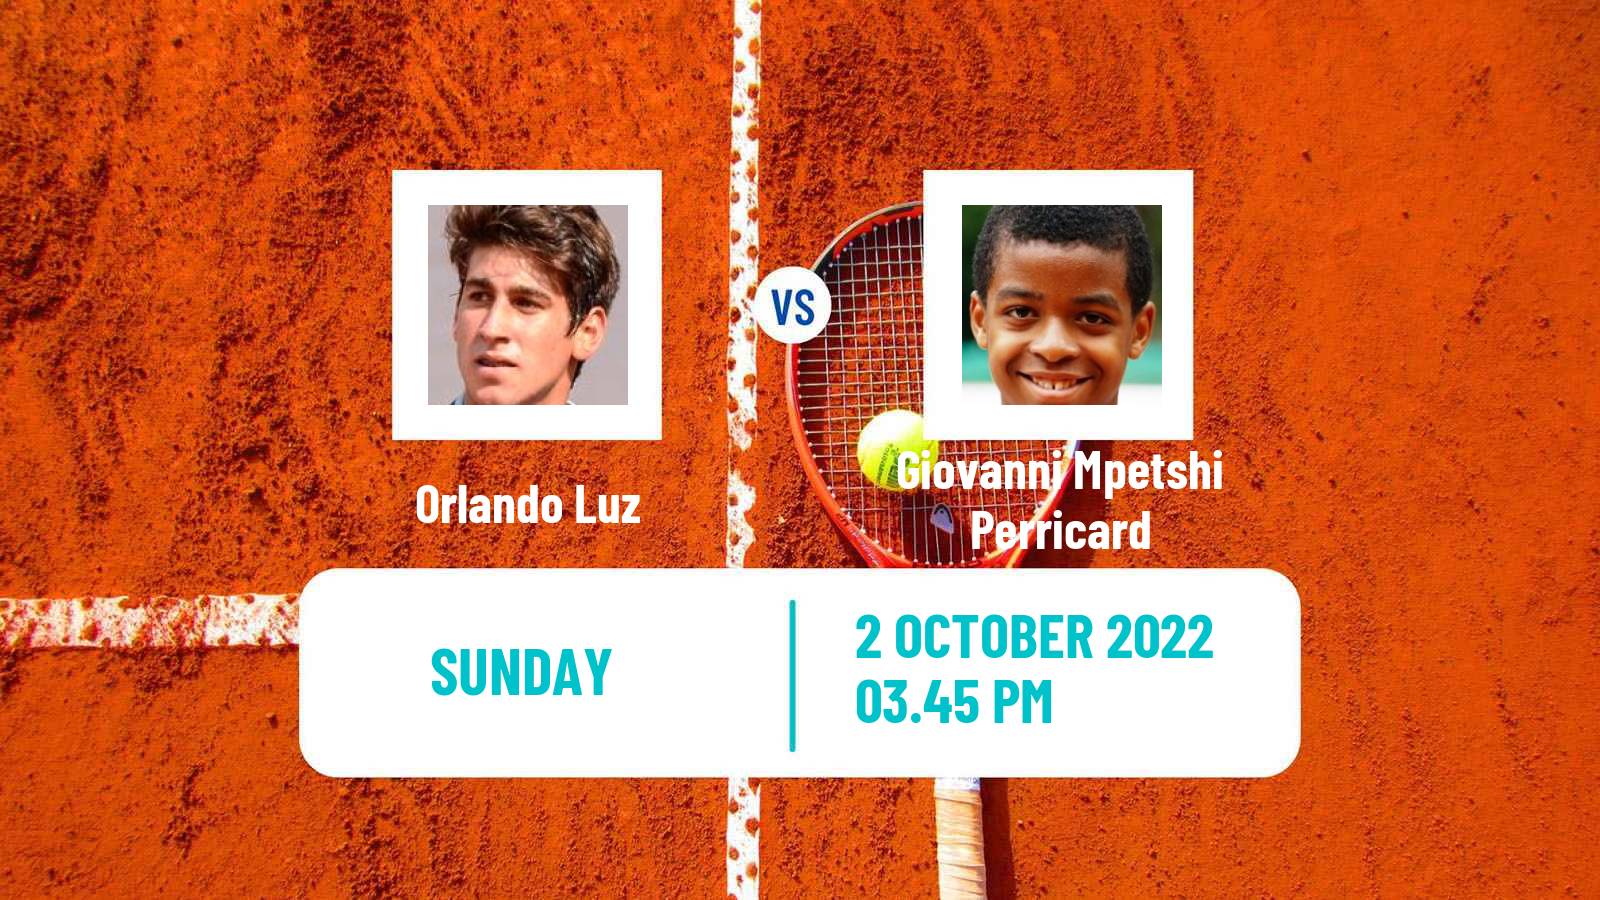 Tennis ATP Challenger Orlando Luz - Giovanni Mpetshi Perricard